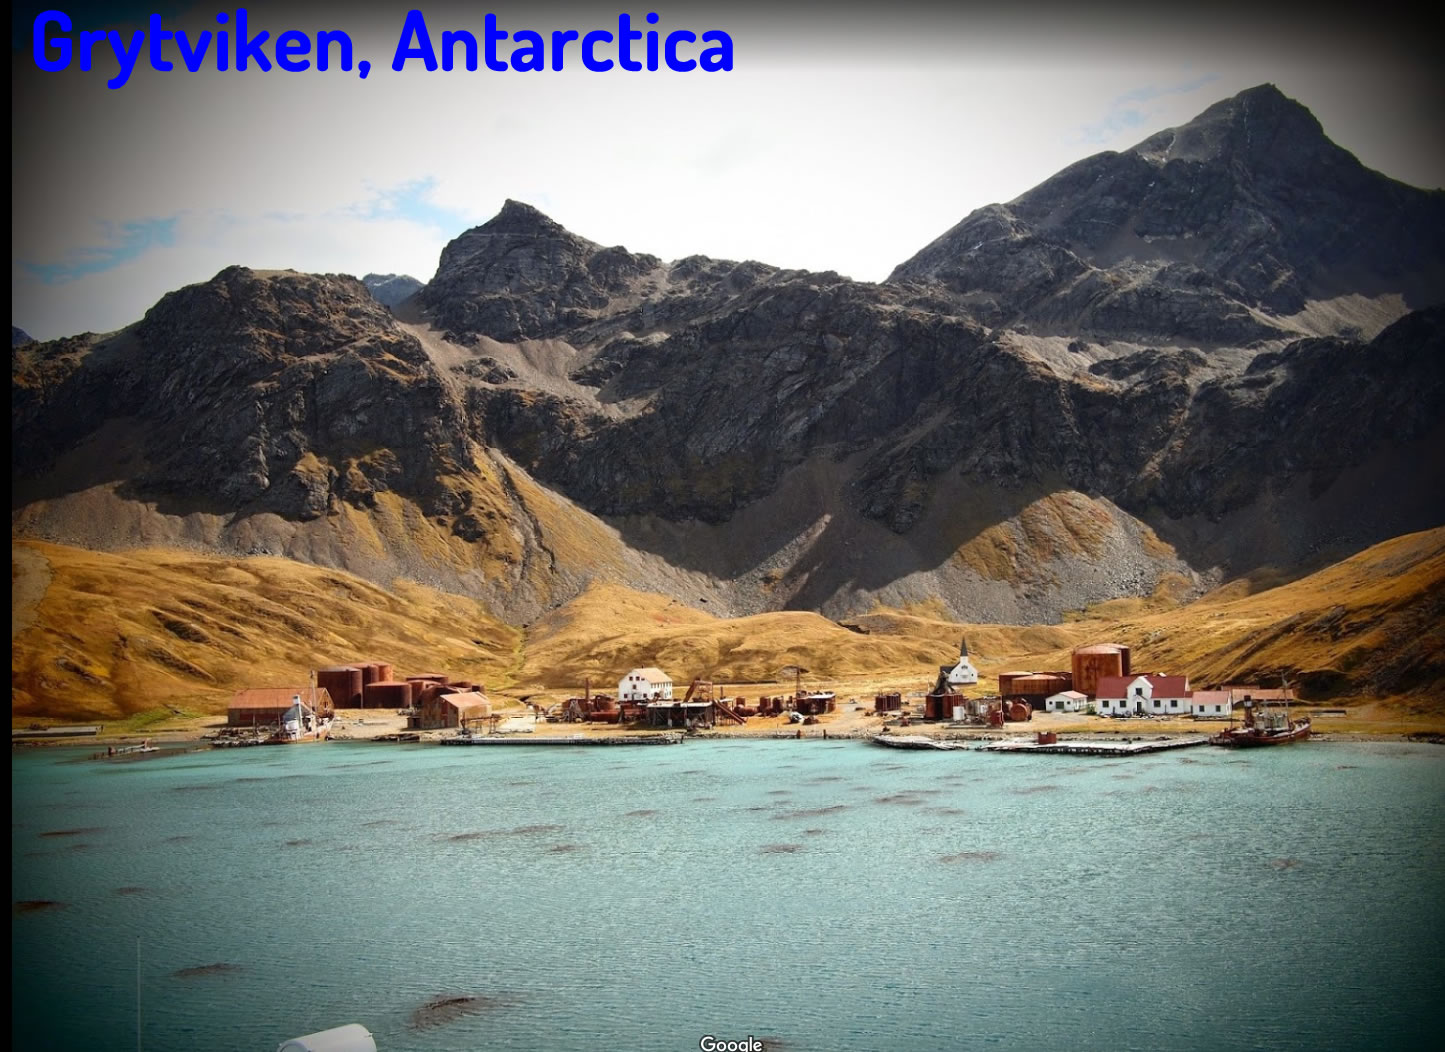 Grytviken Antarctica